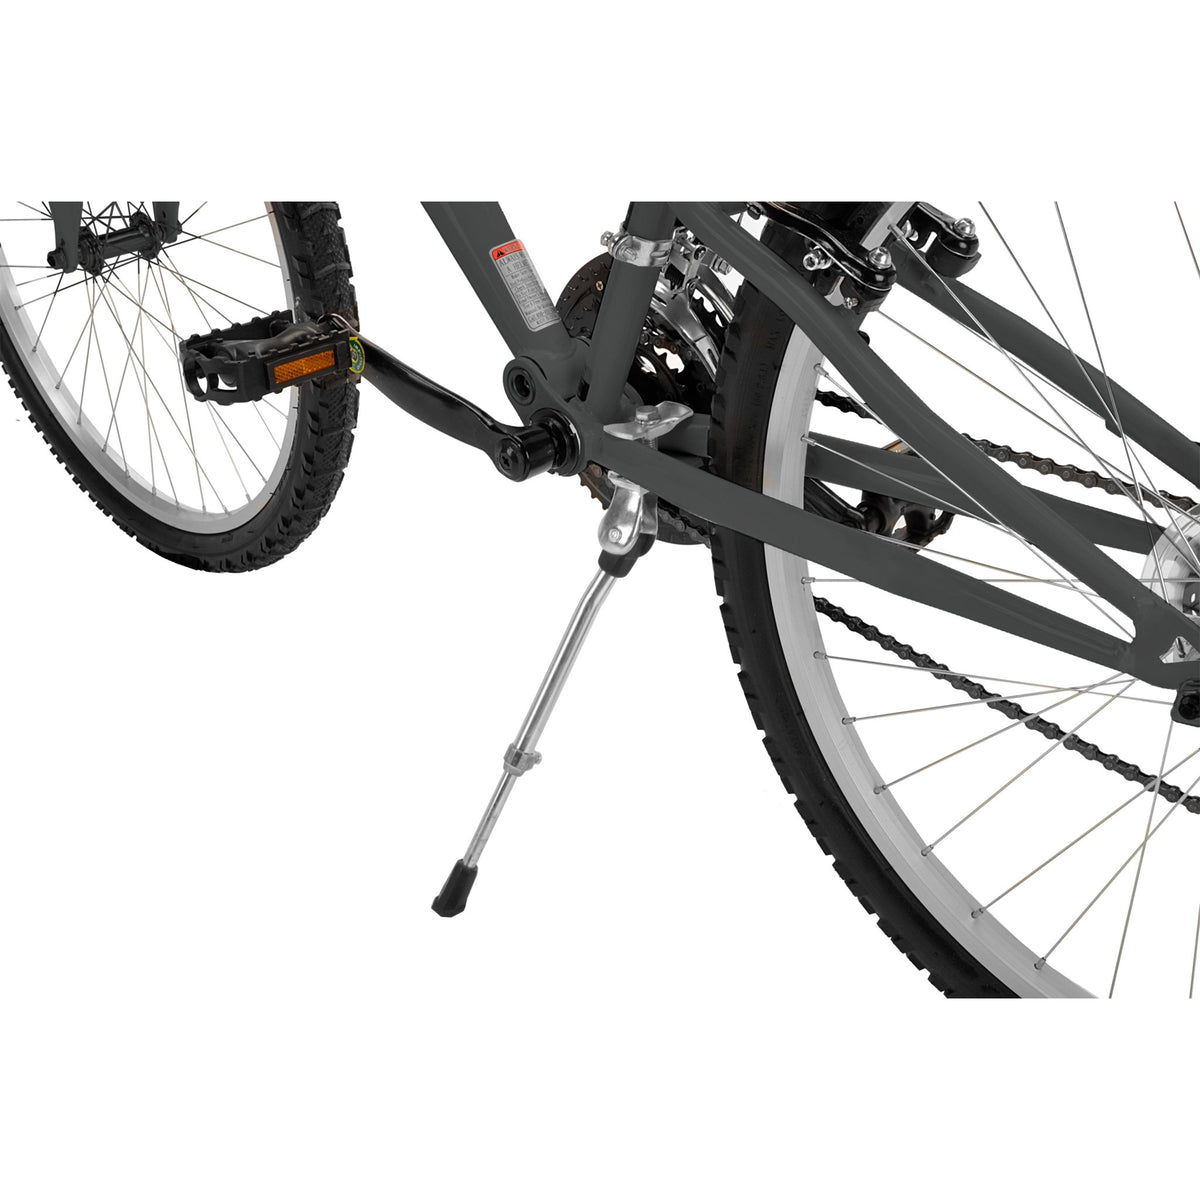 Capstone Adjustable Kick Stand | Fits Most 20" - 700c Bikes